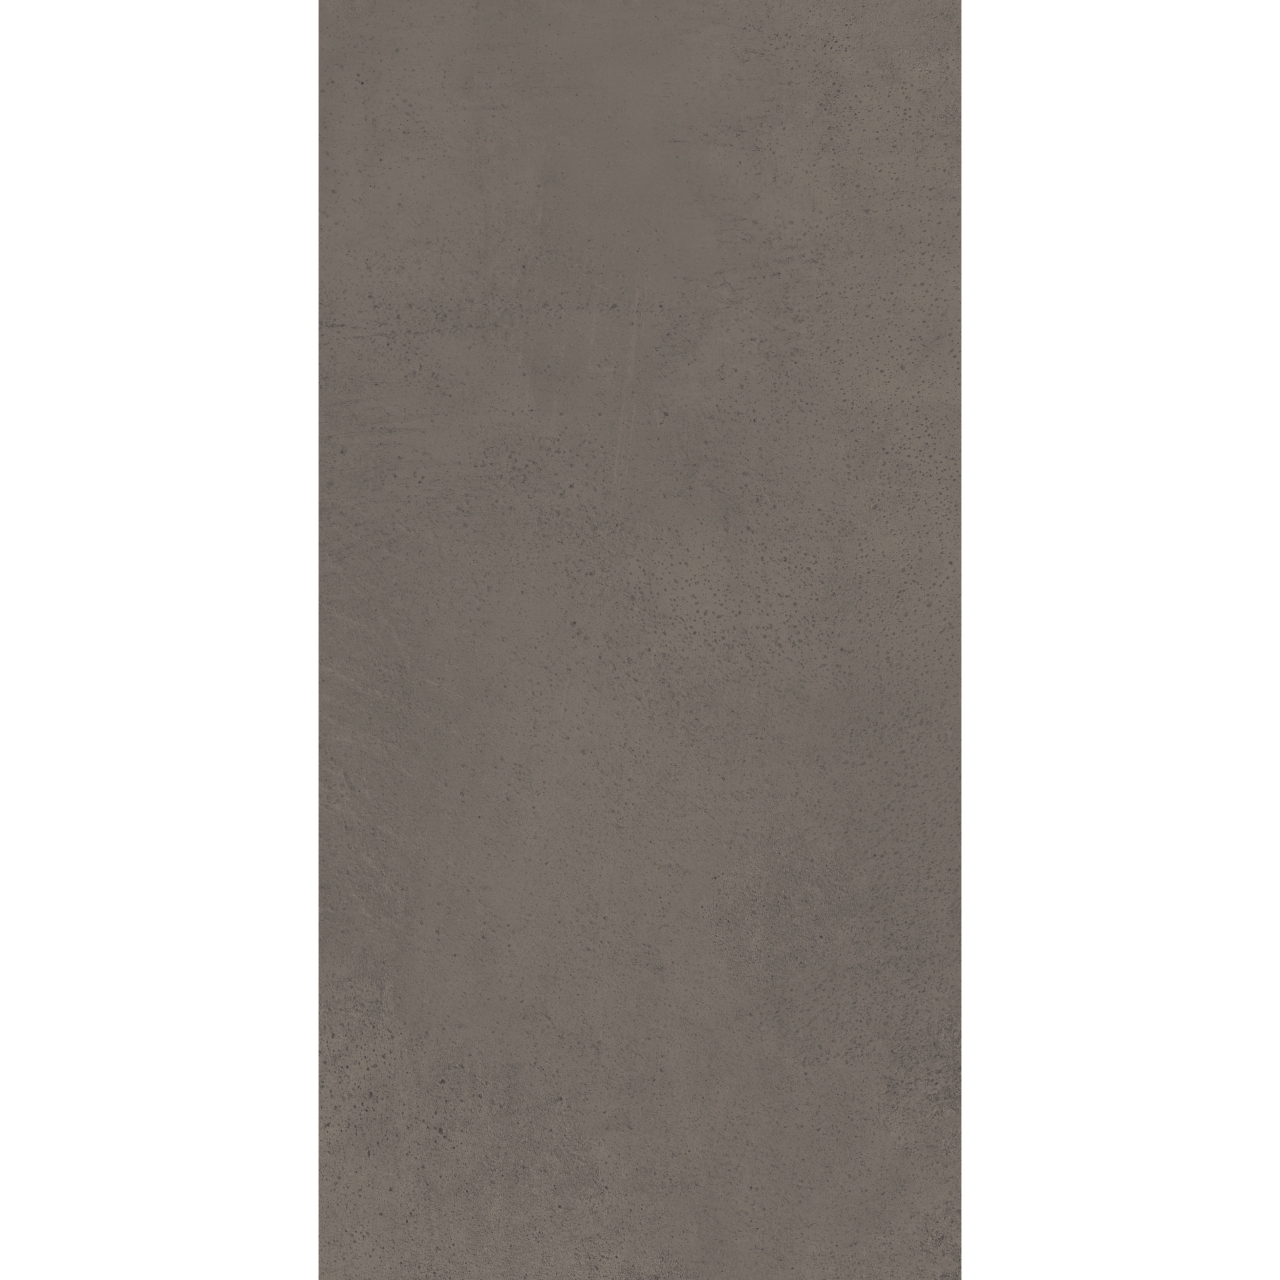 Кварц виниловый ламинат с подложкой Moduleo LayRed 55 Hoover Stone 46957